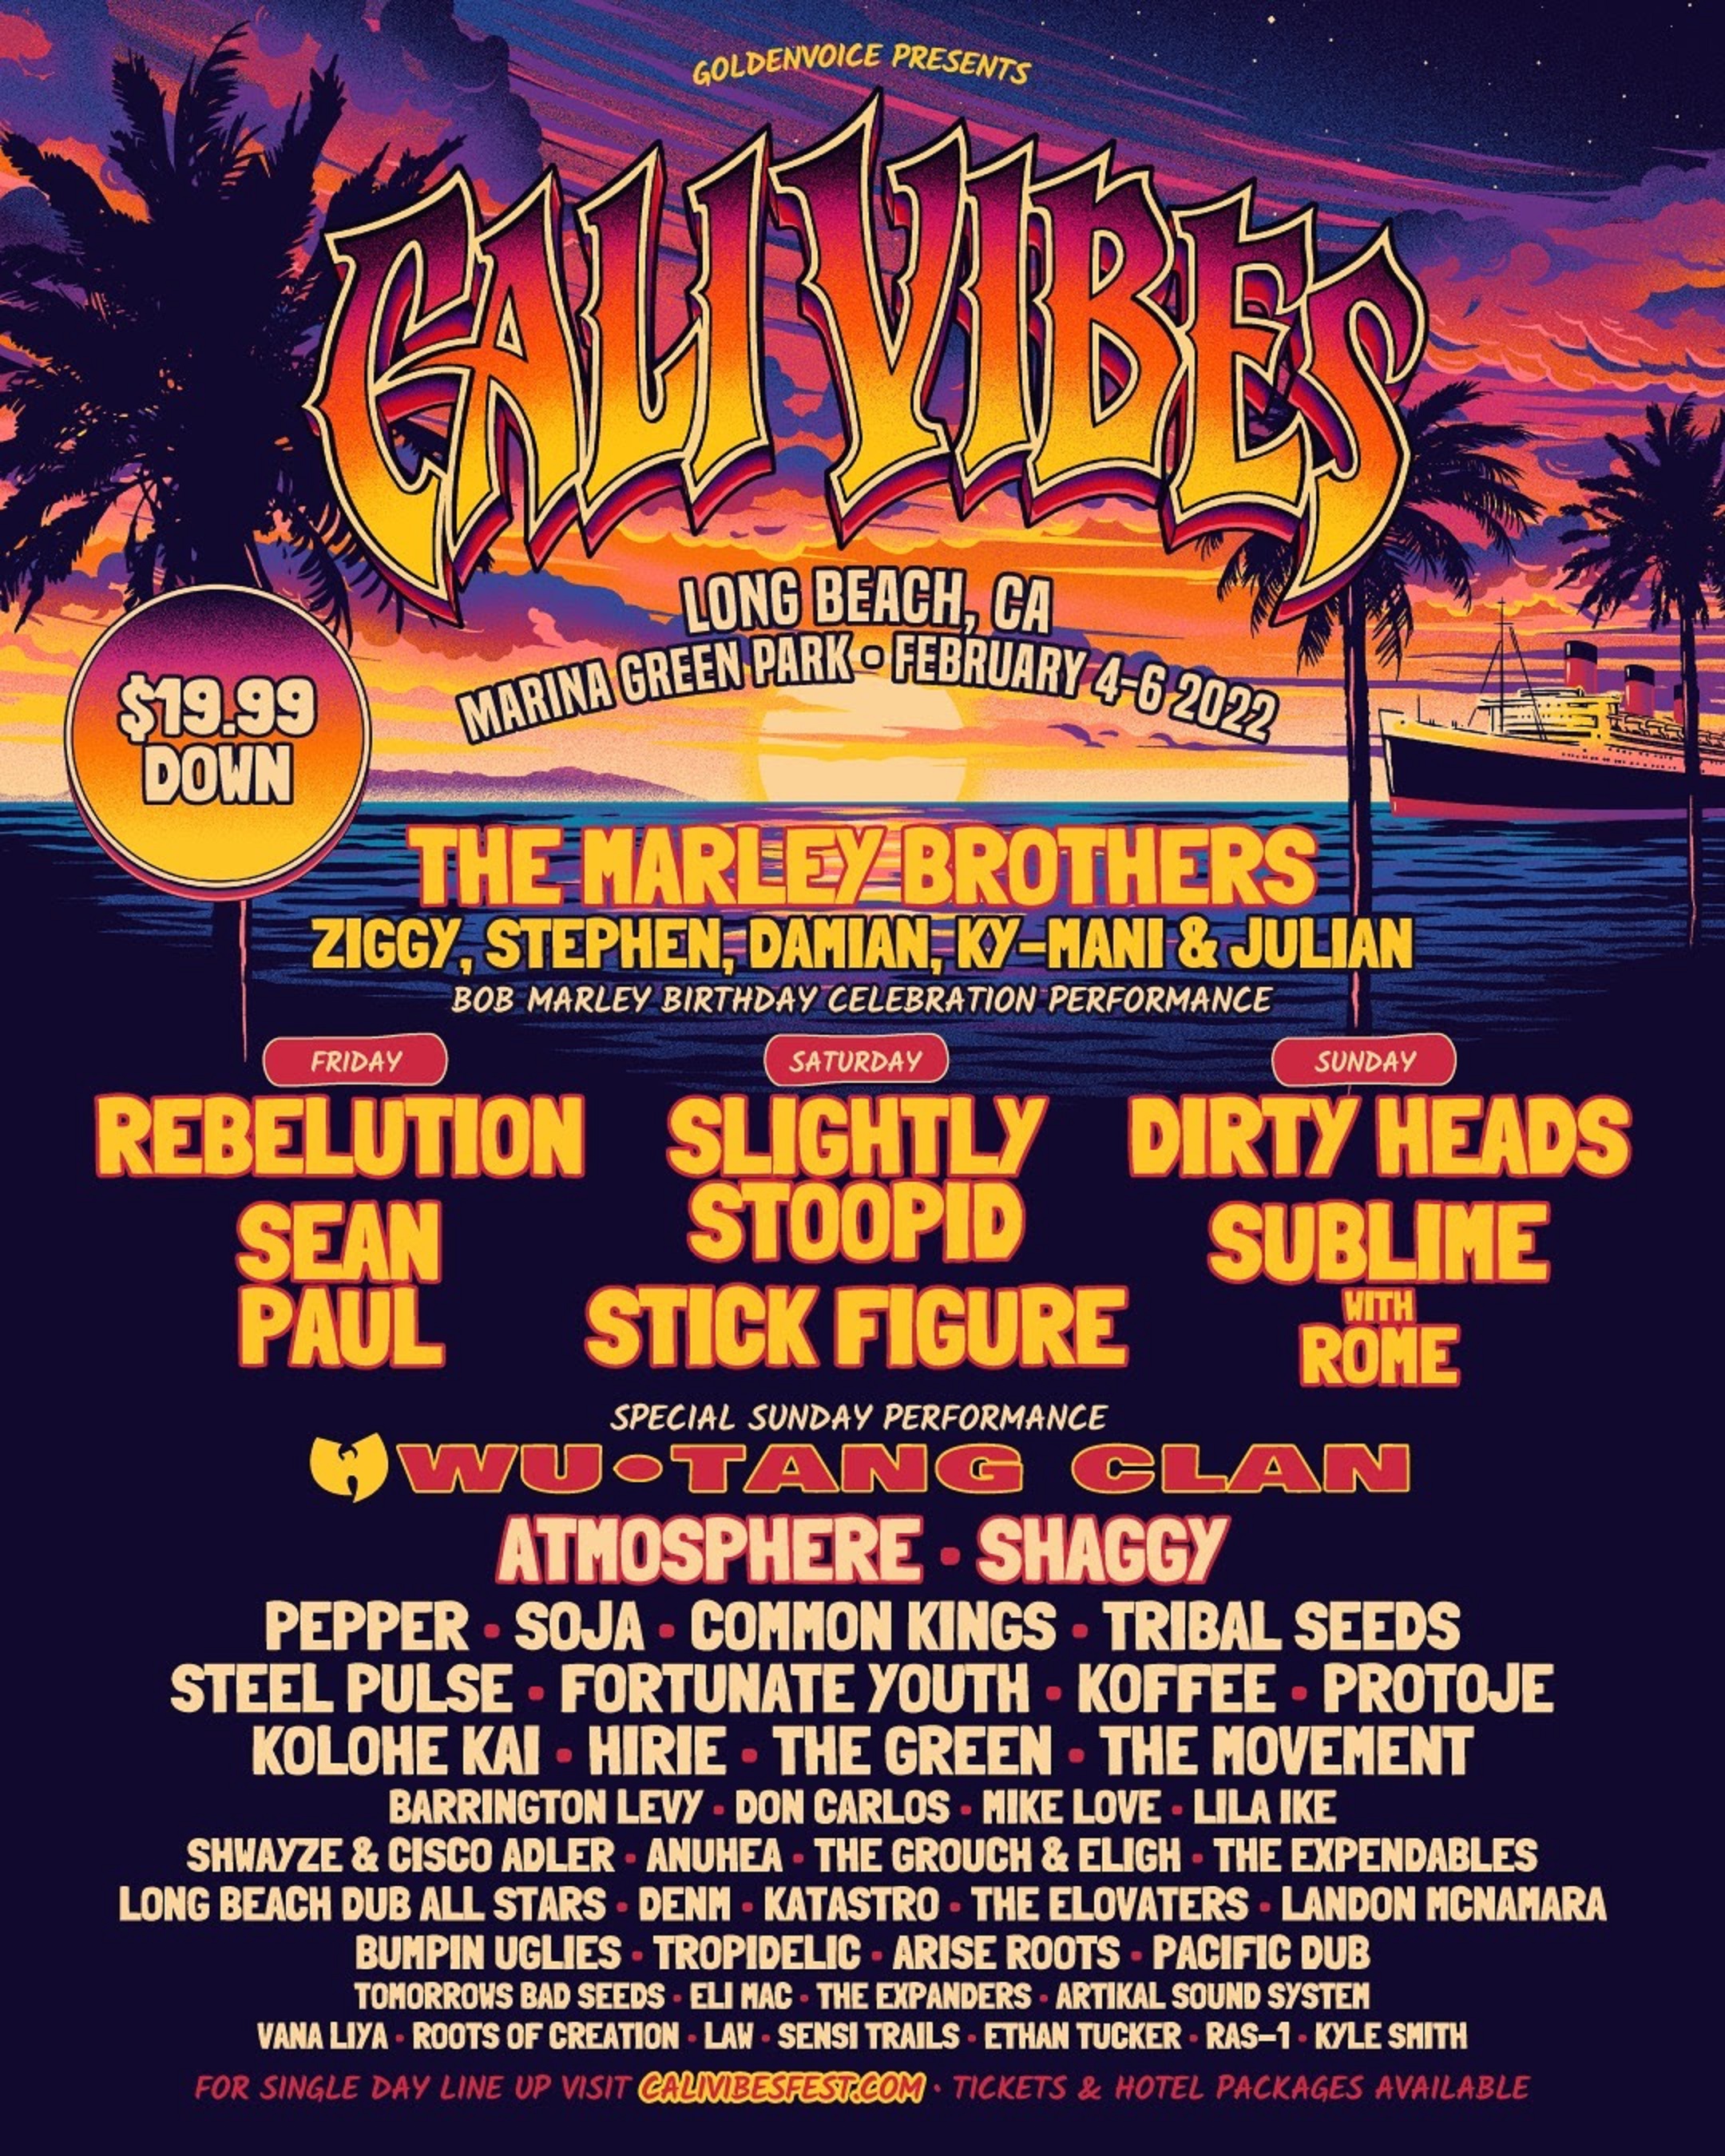 Announcing California Vibrations Festival on February 4-6 2022 